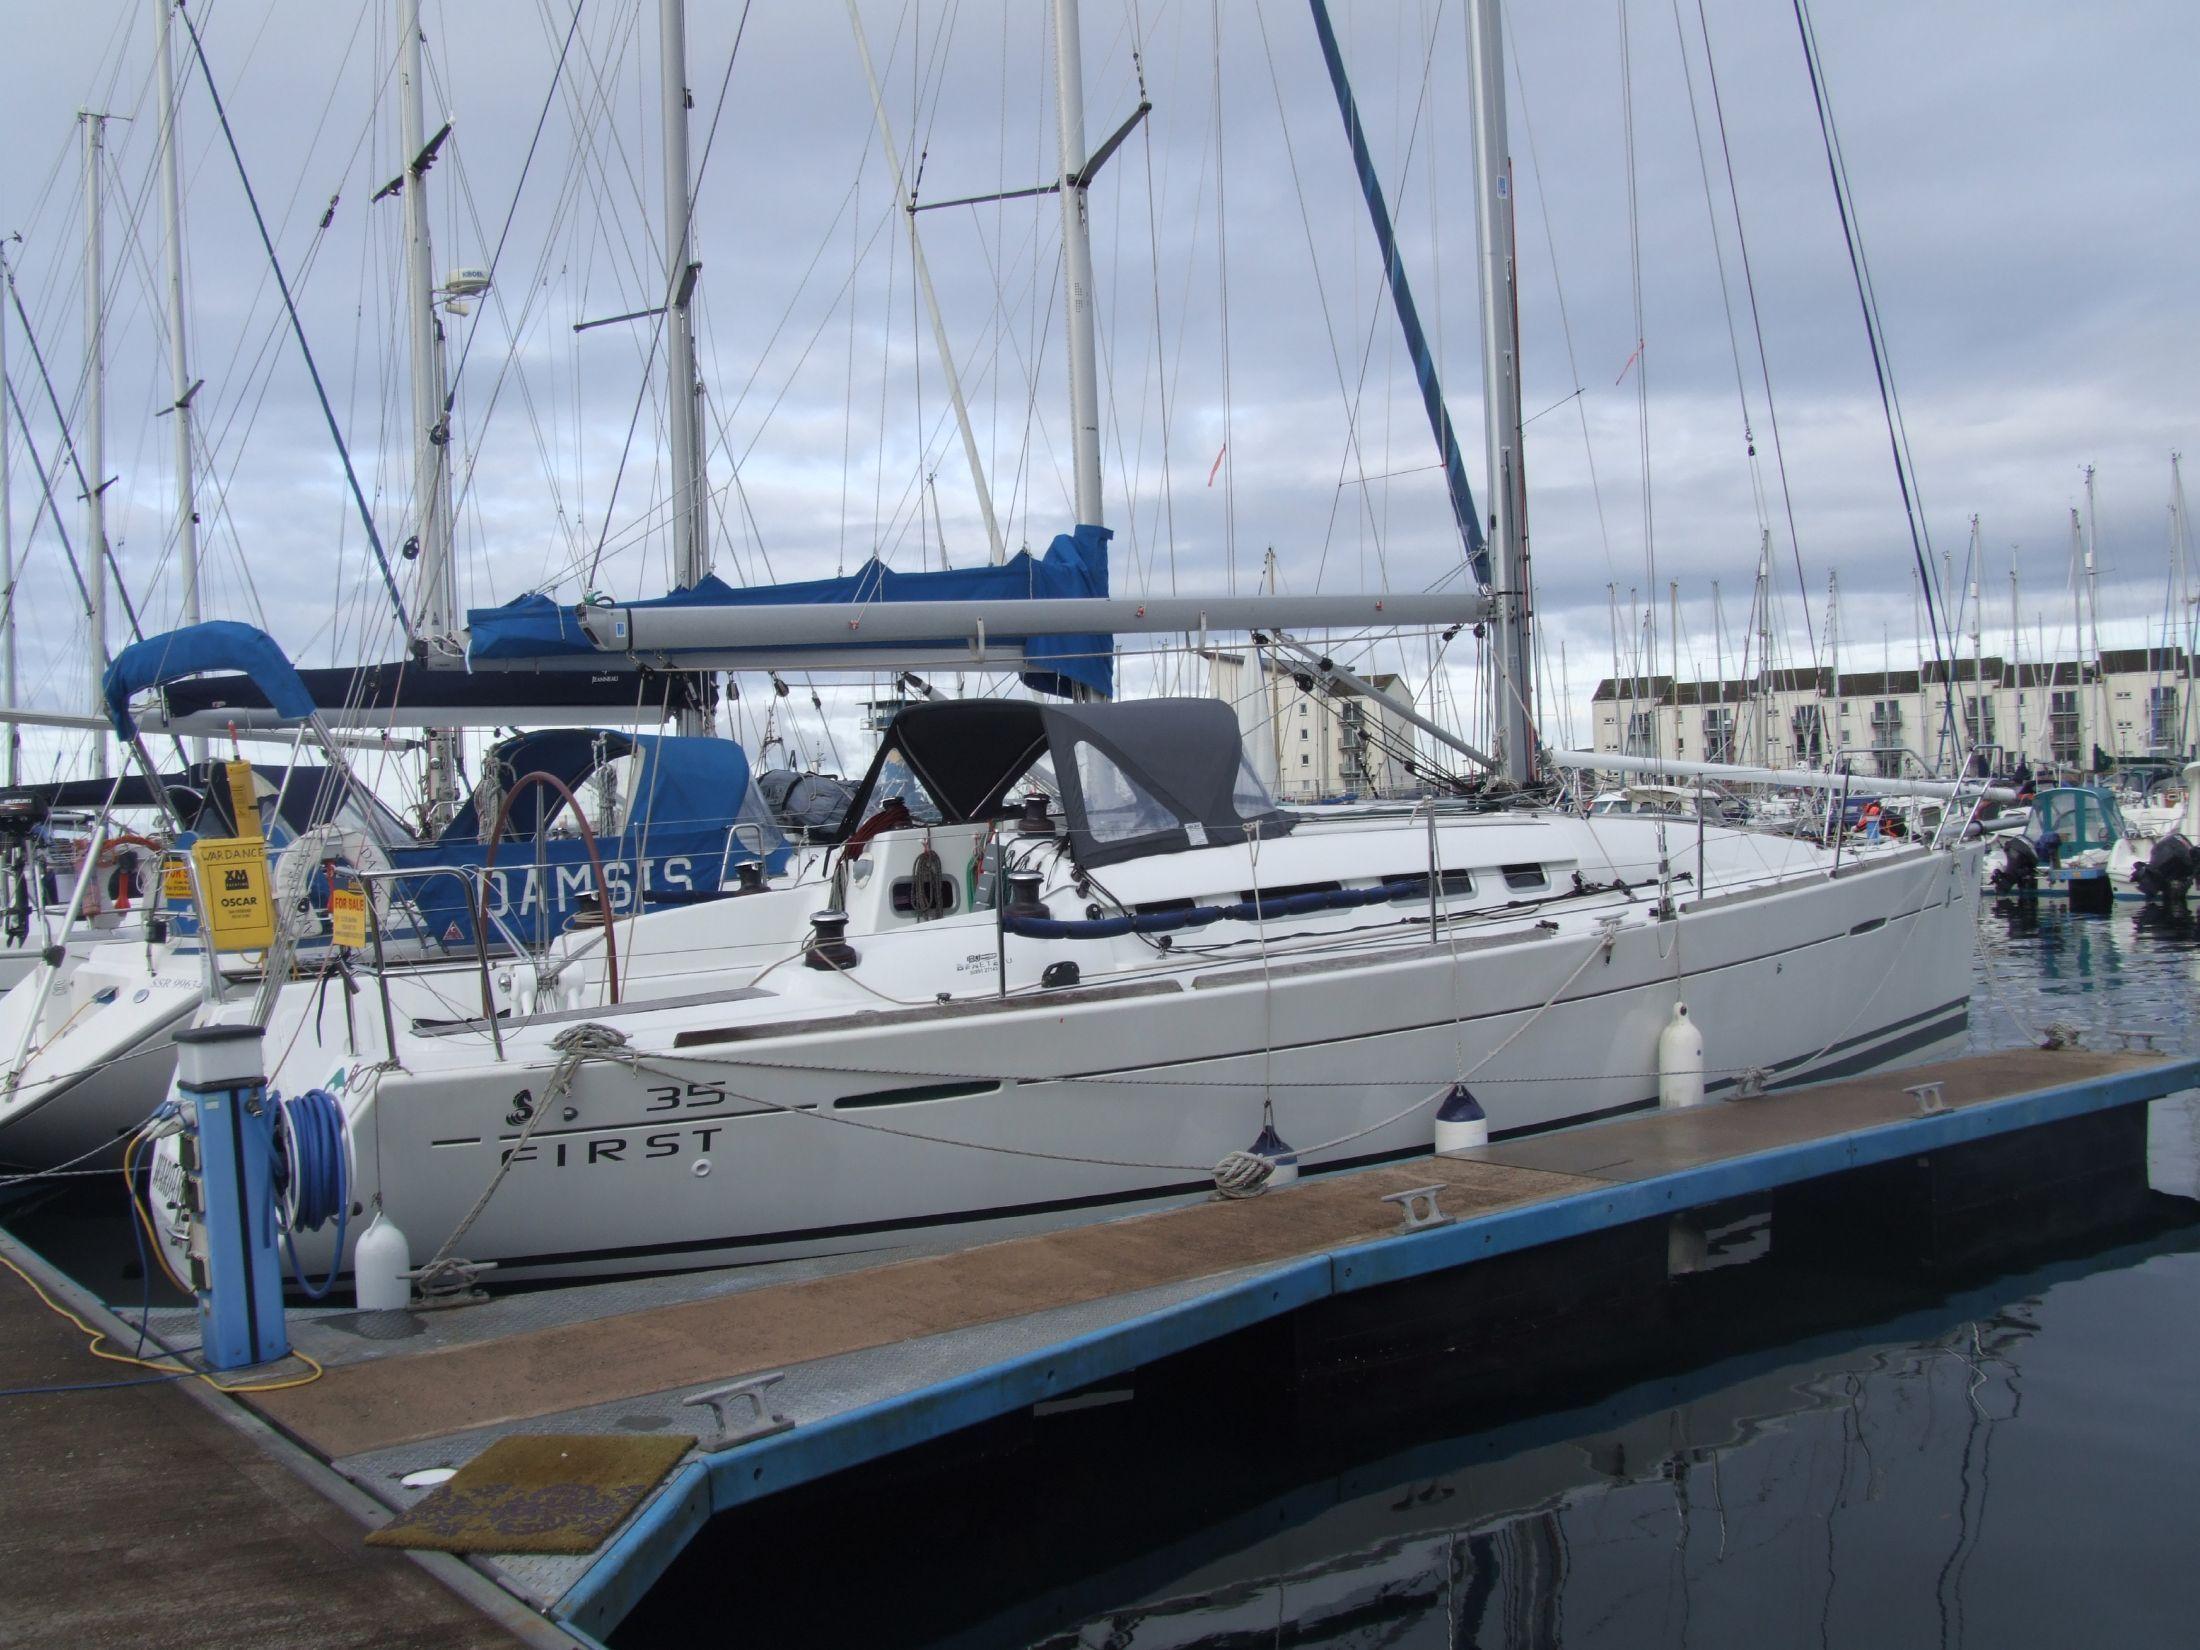 Beneteau First 35, Clyde Marina, Ardrossan, North Ayrshire